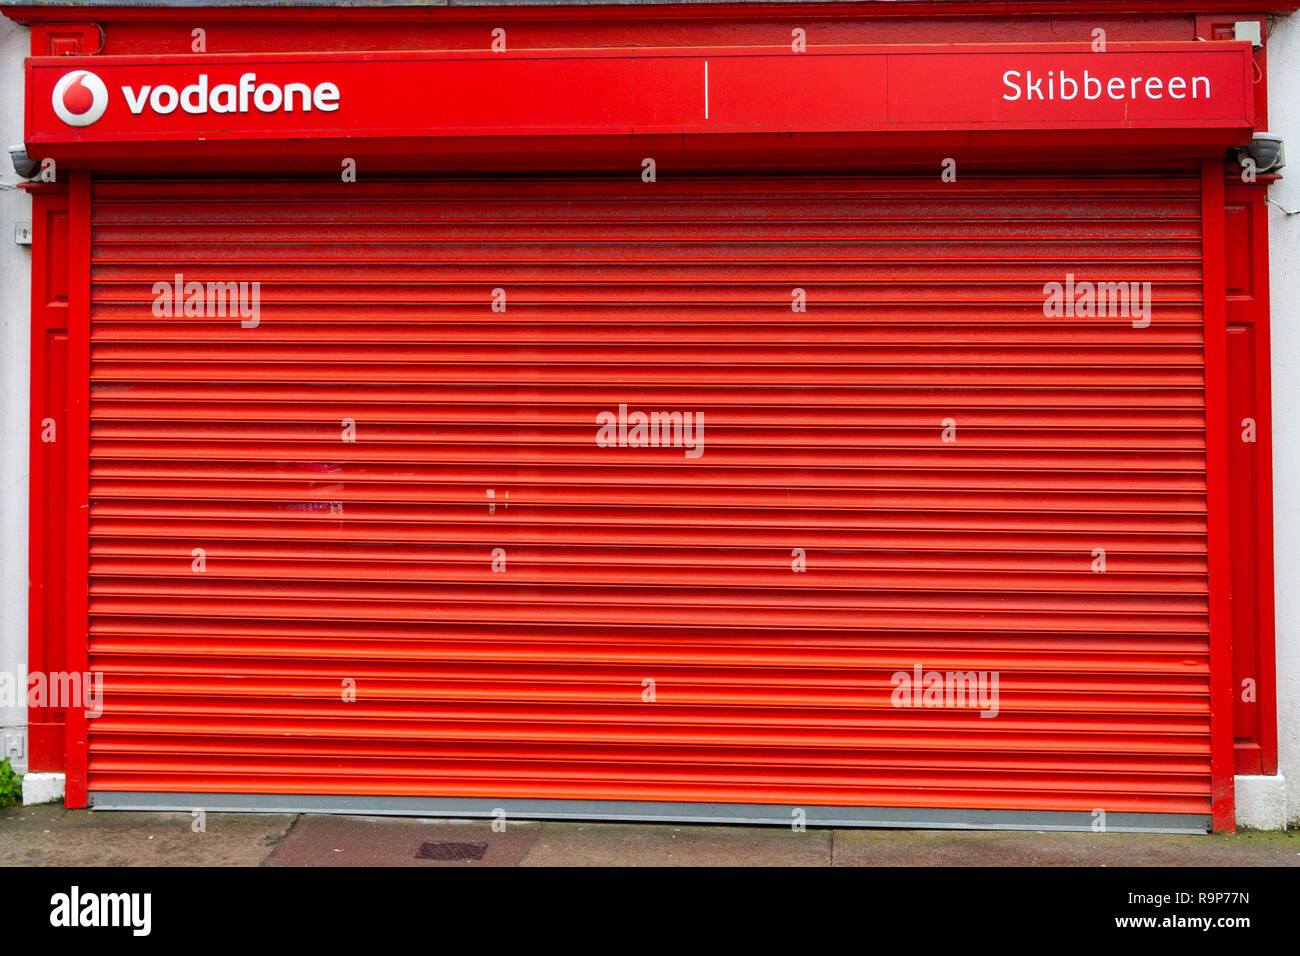 Vodafone shop shut with metal shutters down Stock Photo